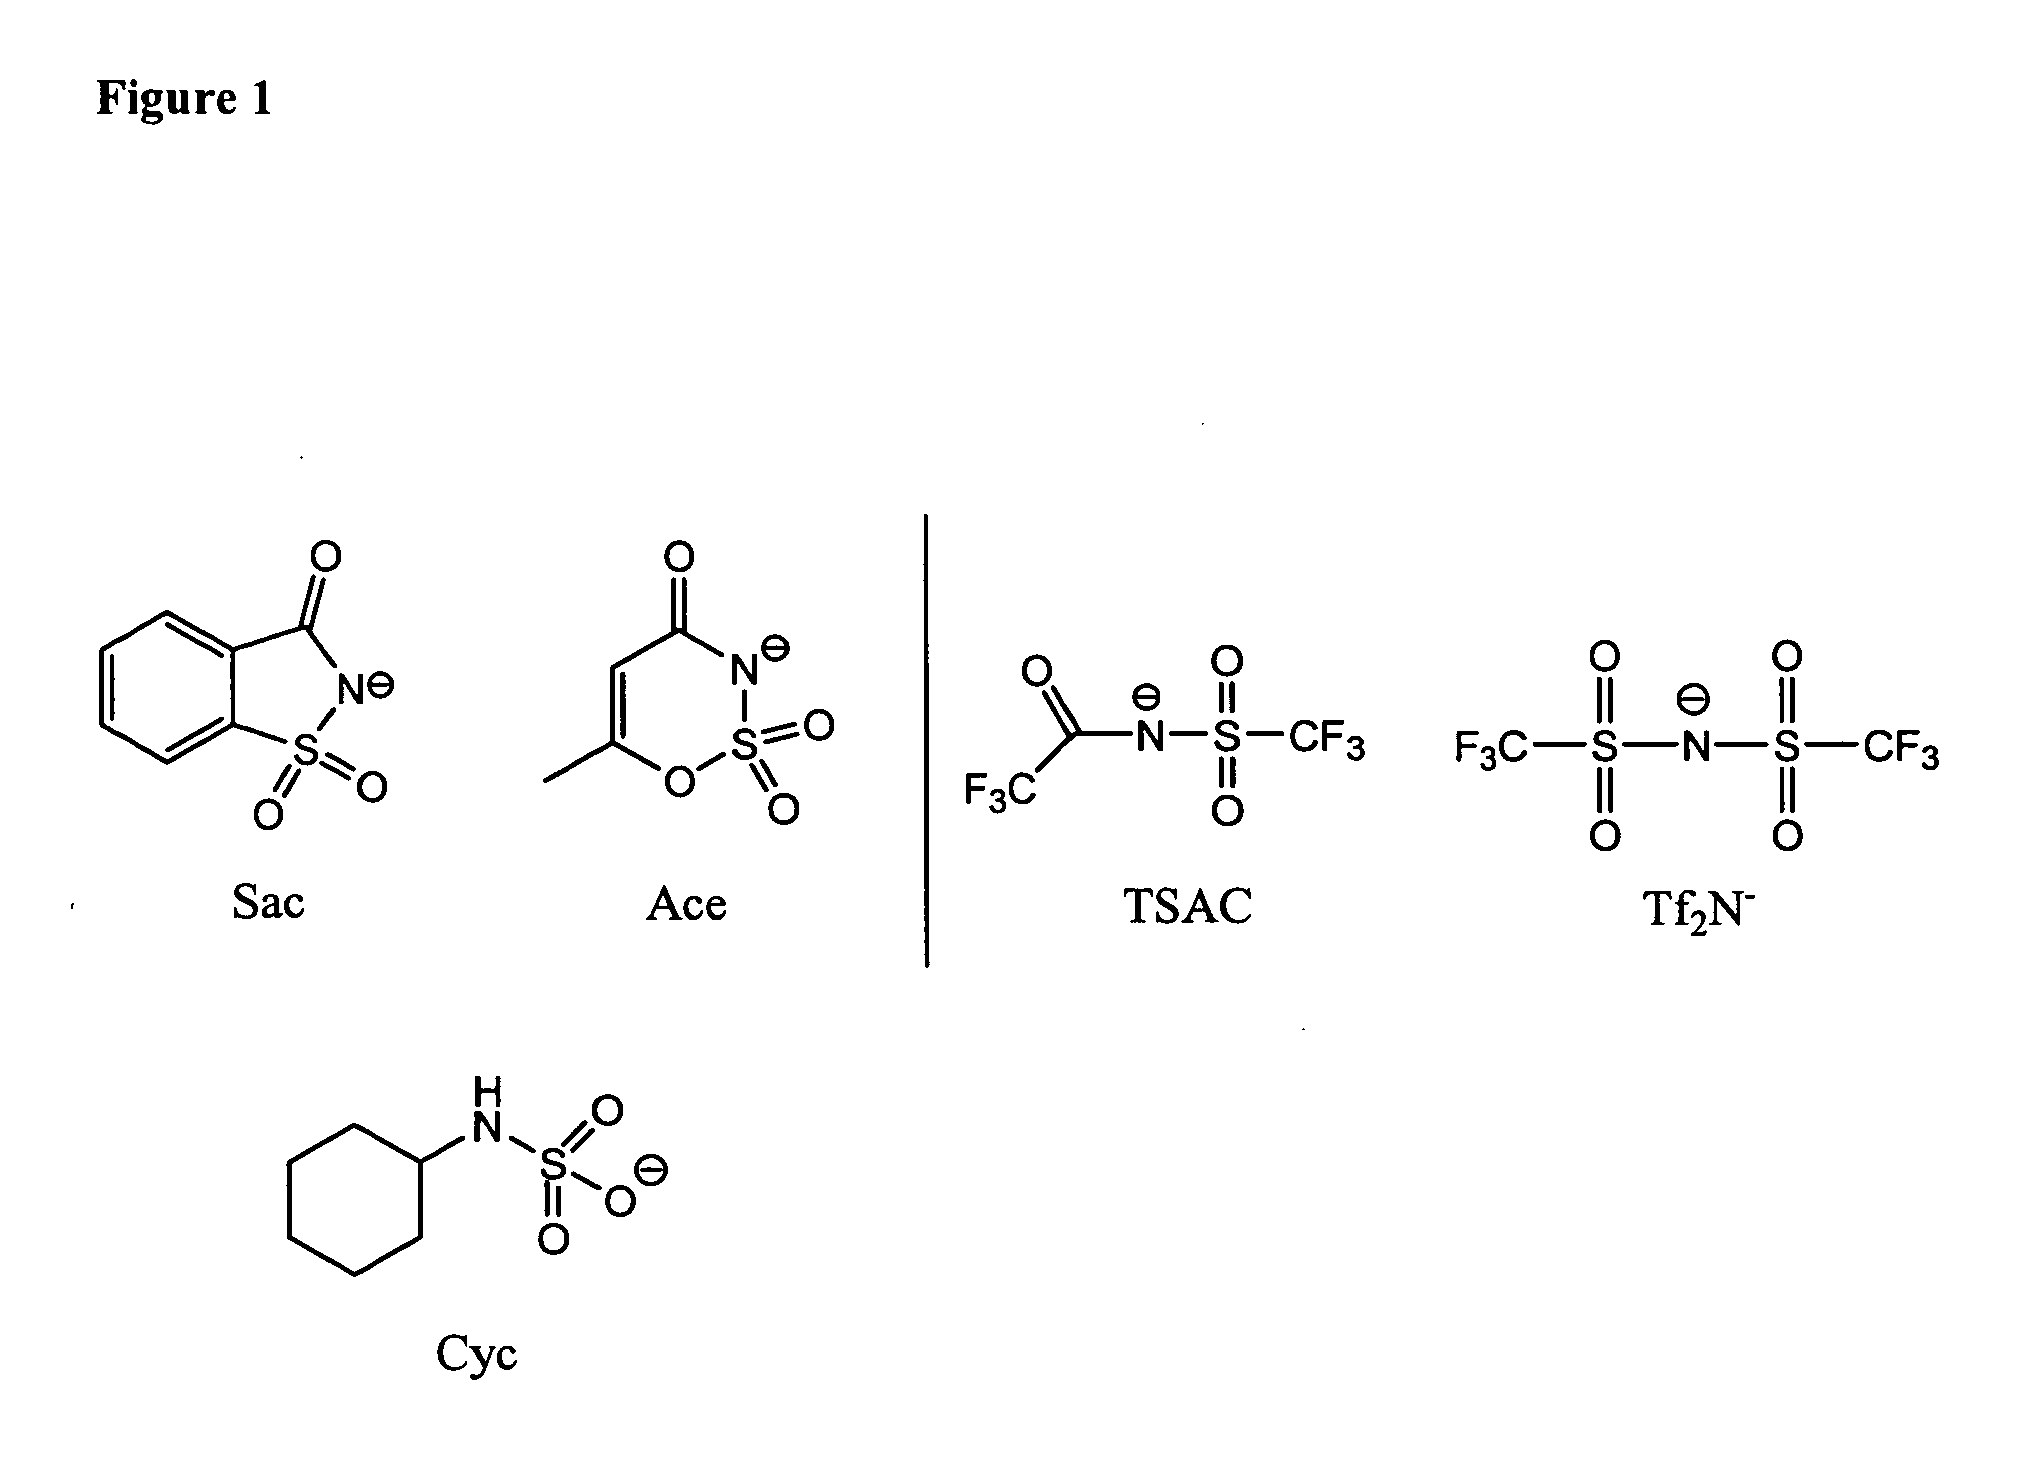 Anionic-sweetener-based ionic liquids and methods of use thereof